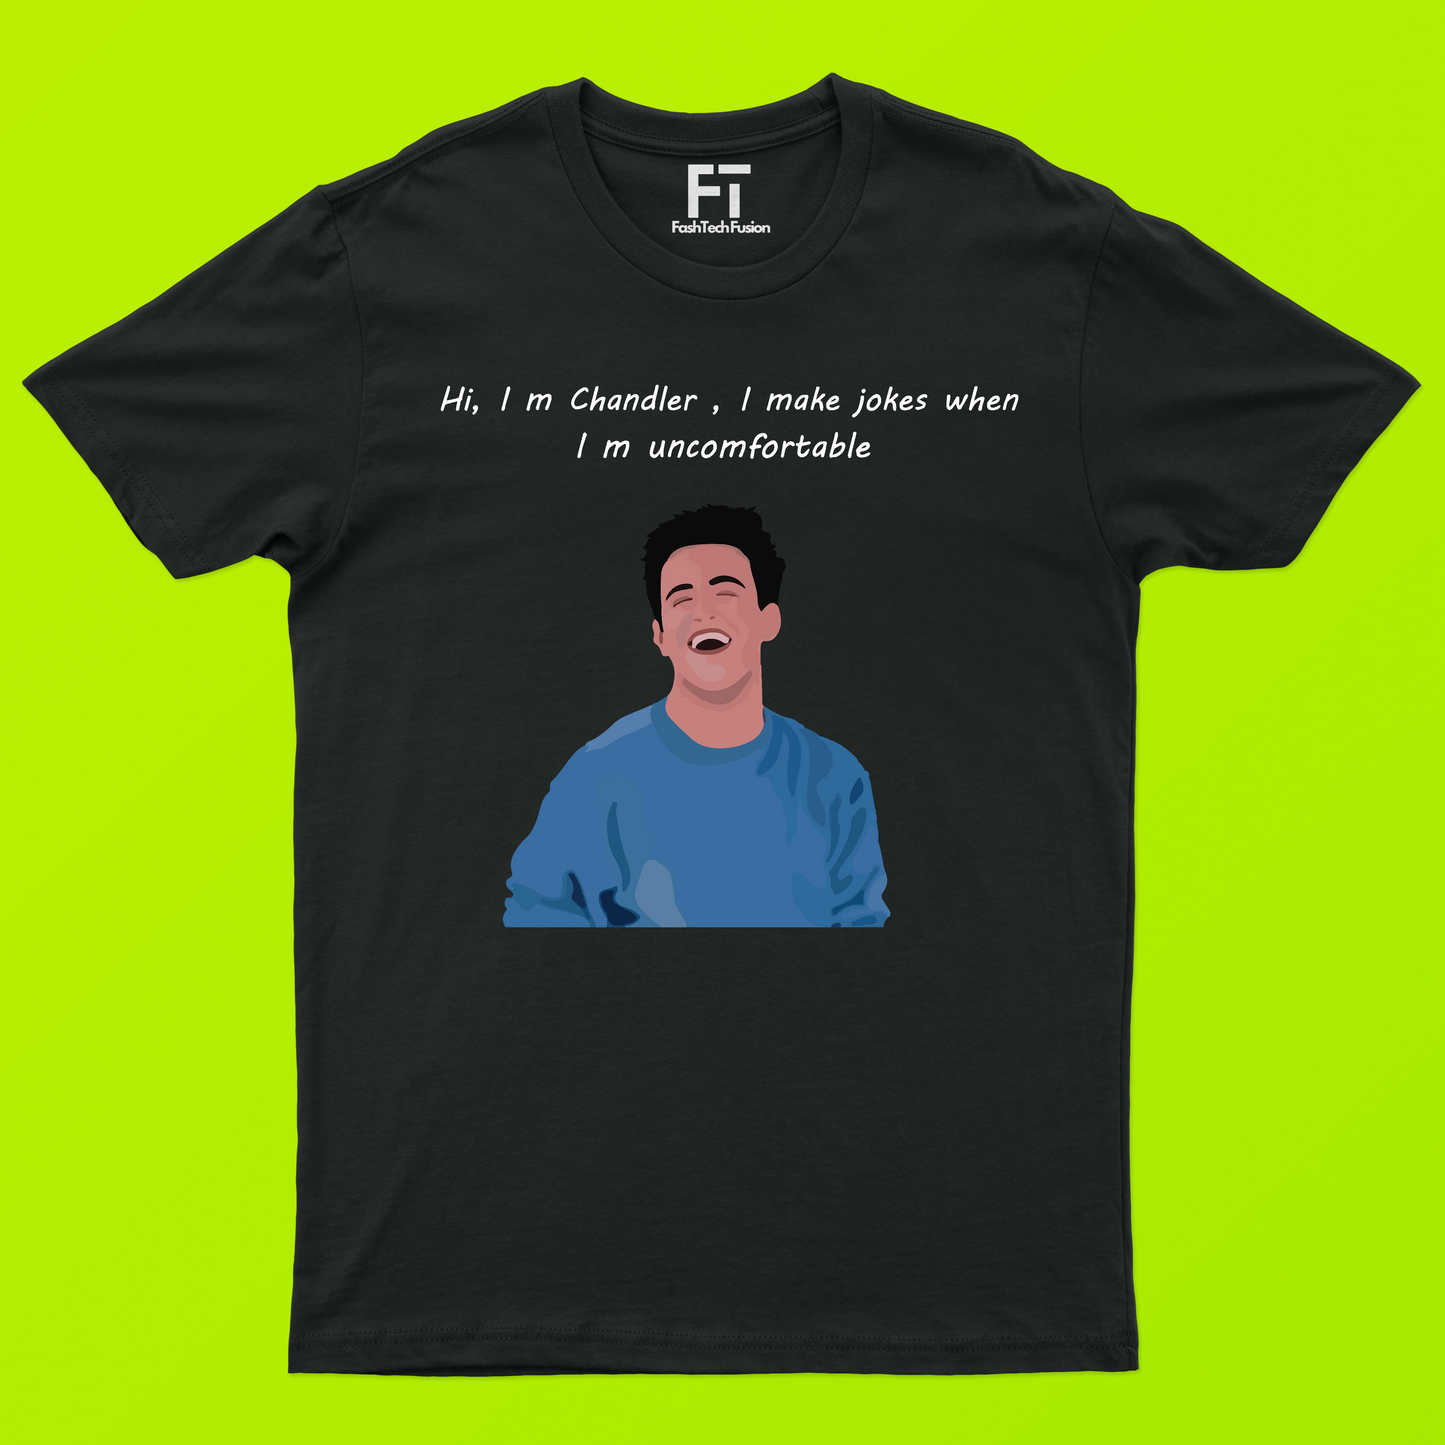 I'm Chandler T-Shirt